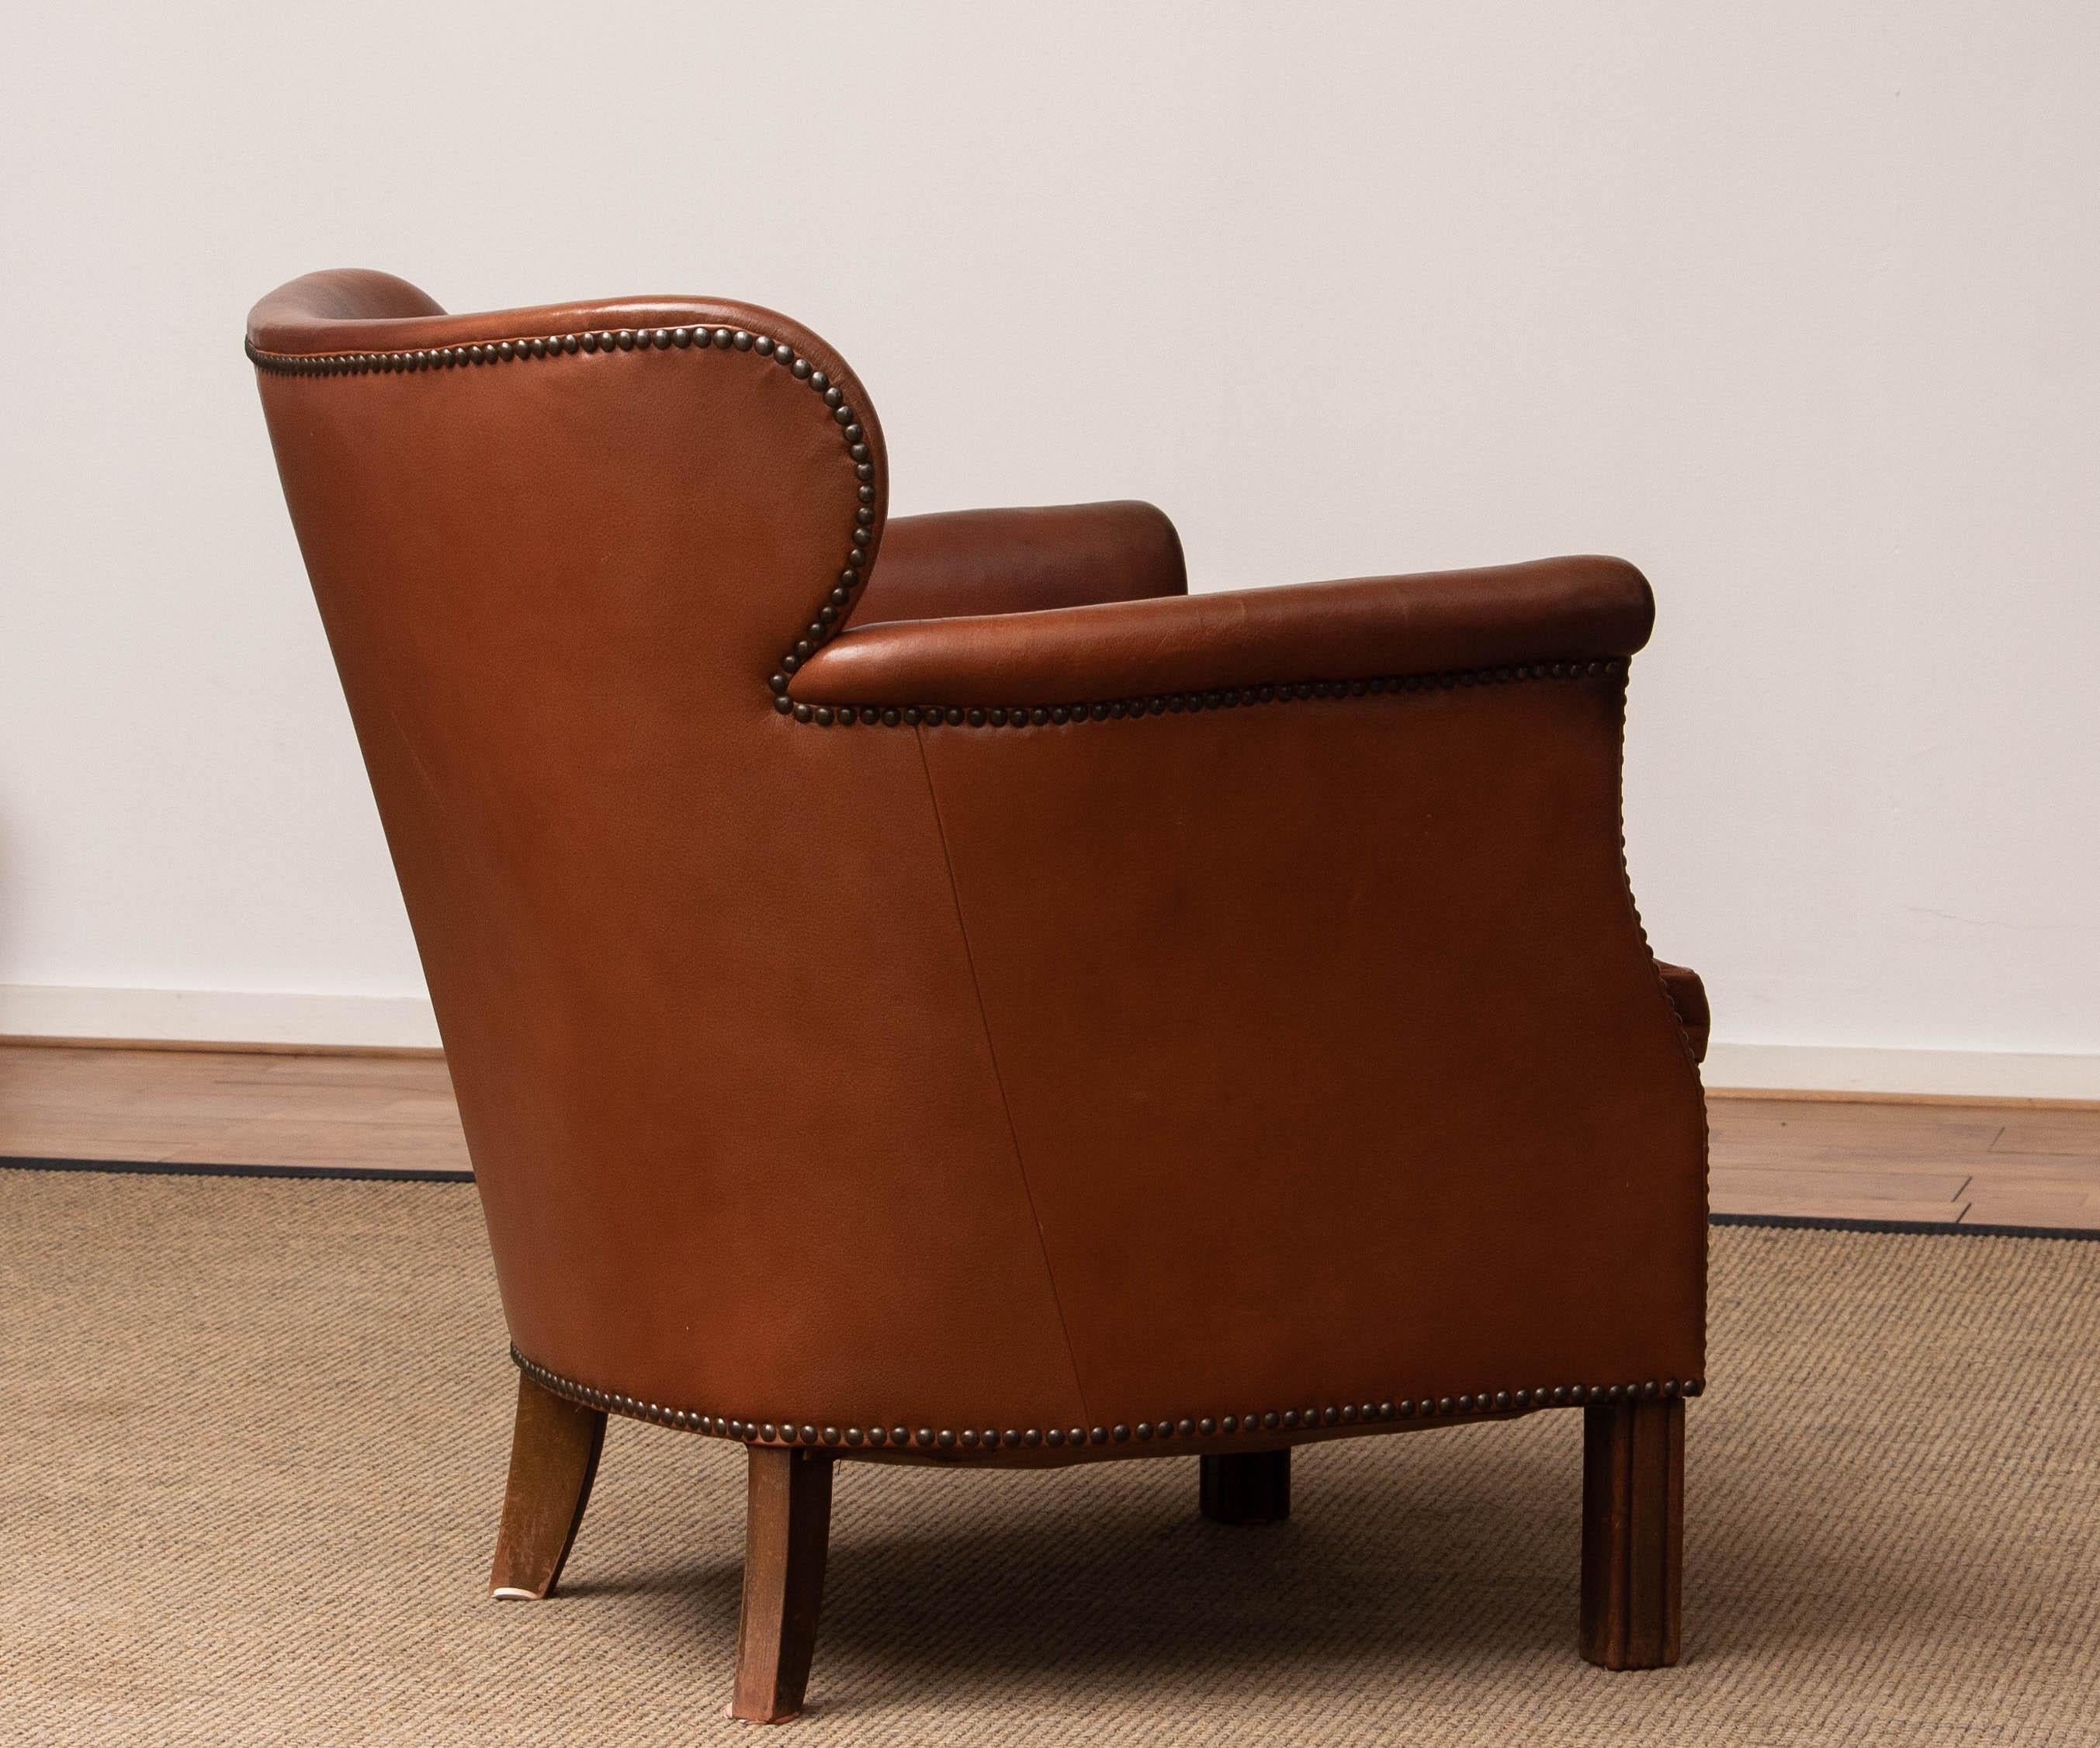 Danish 1940's Scandinavian Tan / Brown Nailed Leather Club / Cigar Chair from Denmark